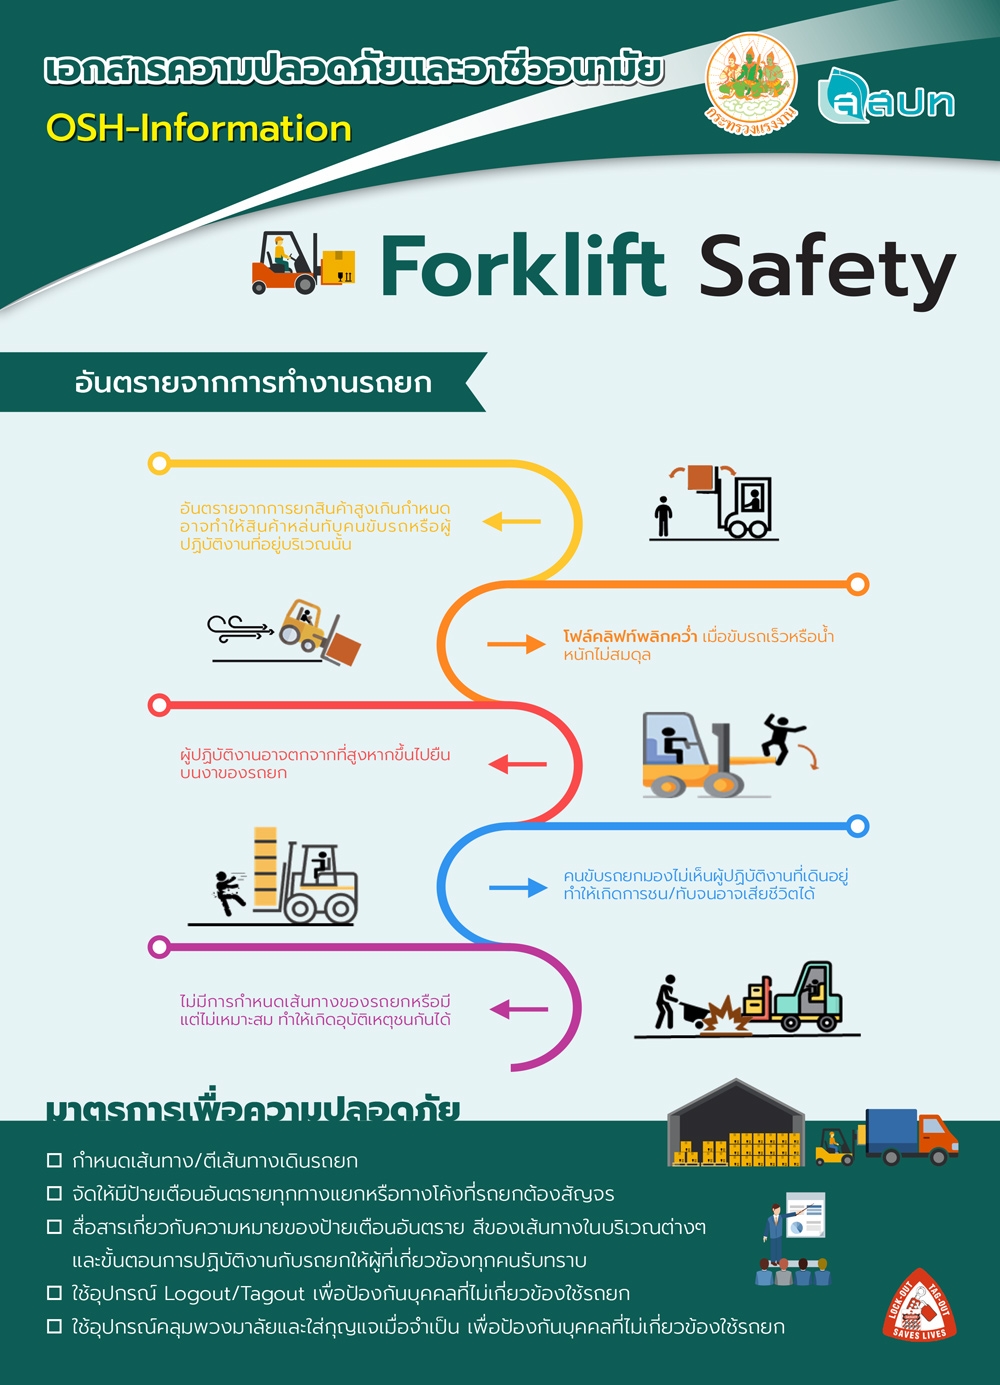 Forklift Safety อันตรายจากการทำงานรถยก